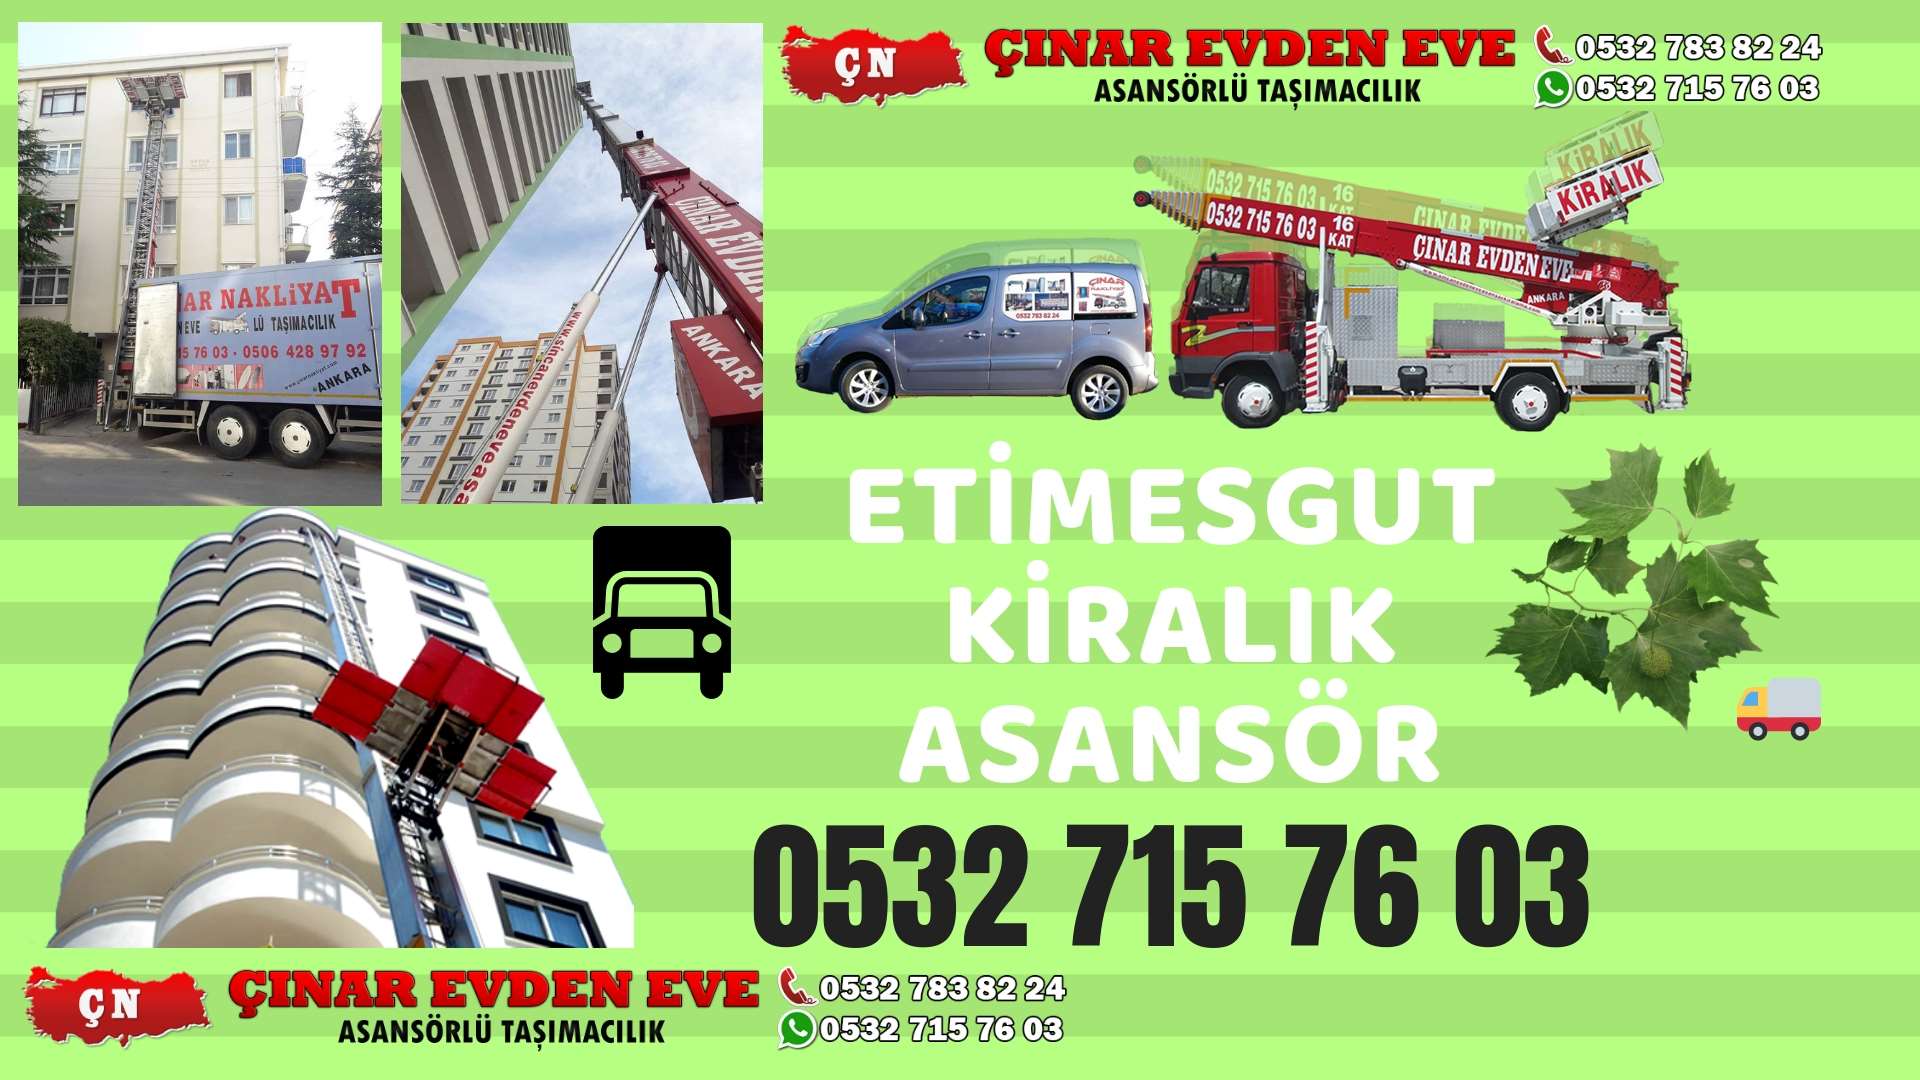 Ankara Bağlıca Ev taşıma asansörü kiralama ankara 0532 715 76 03